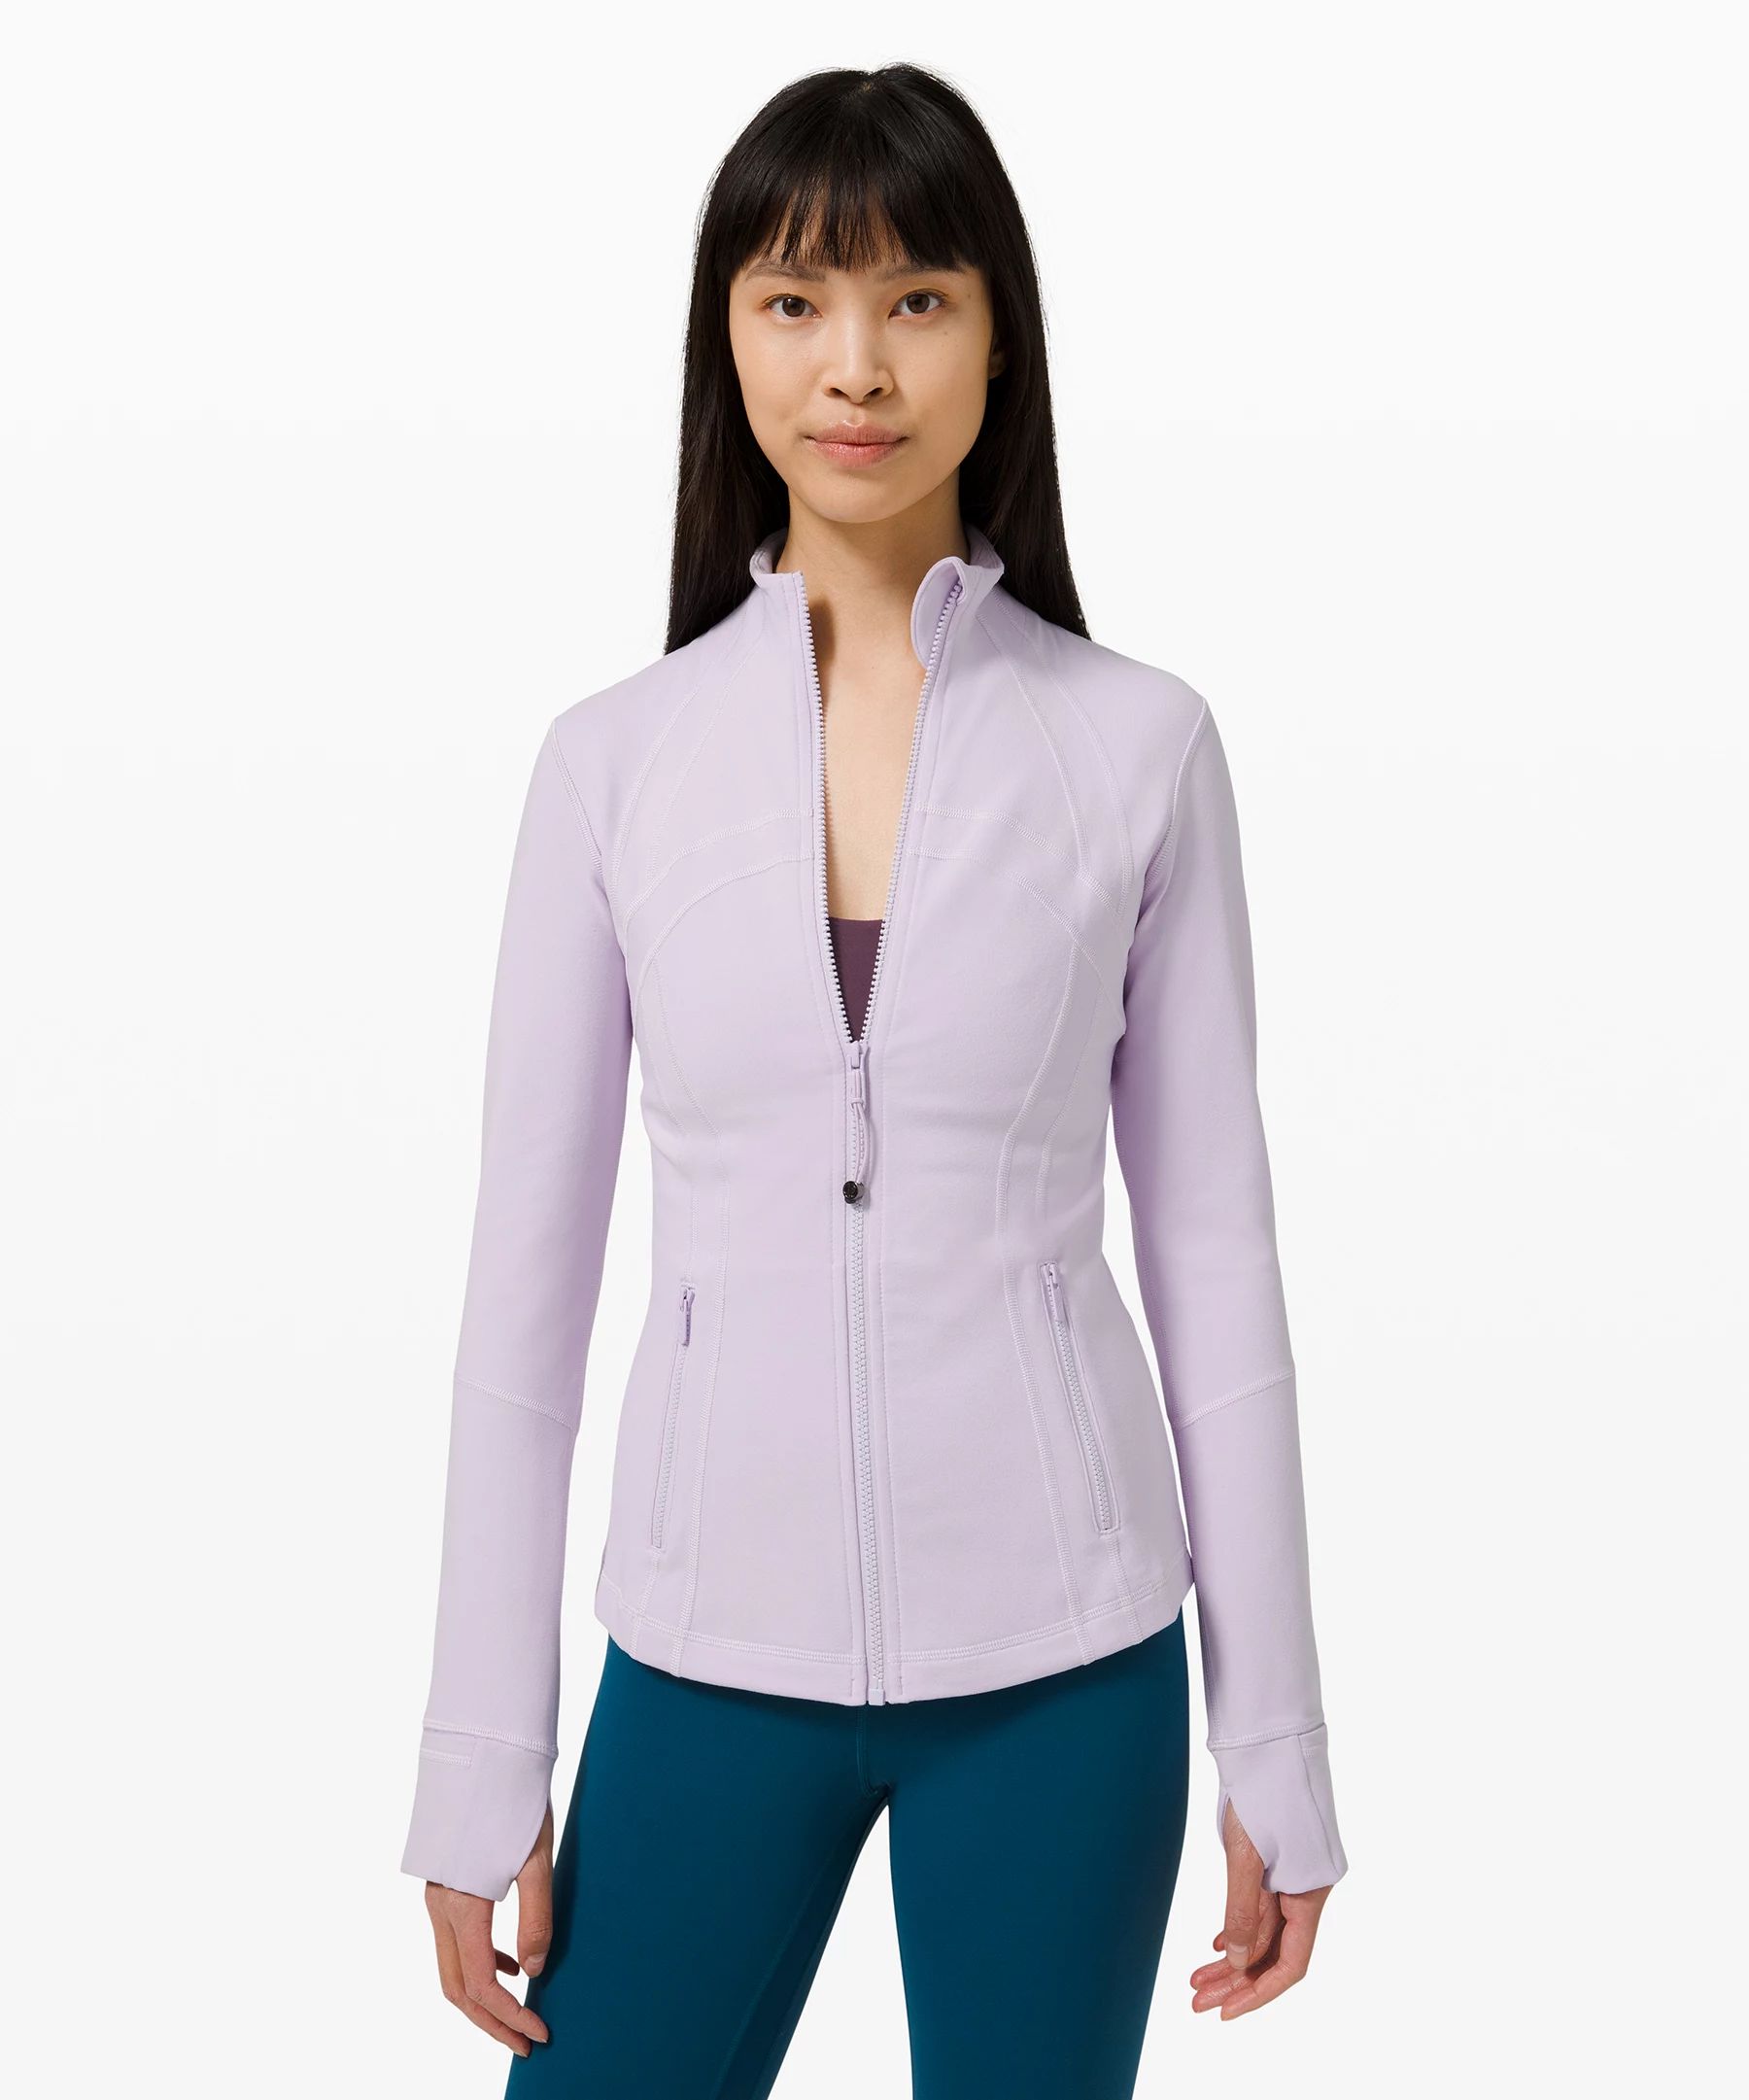 Define Jacket | Women's Jackets | lululemon | Lululemon (US)